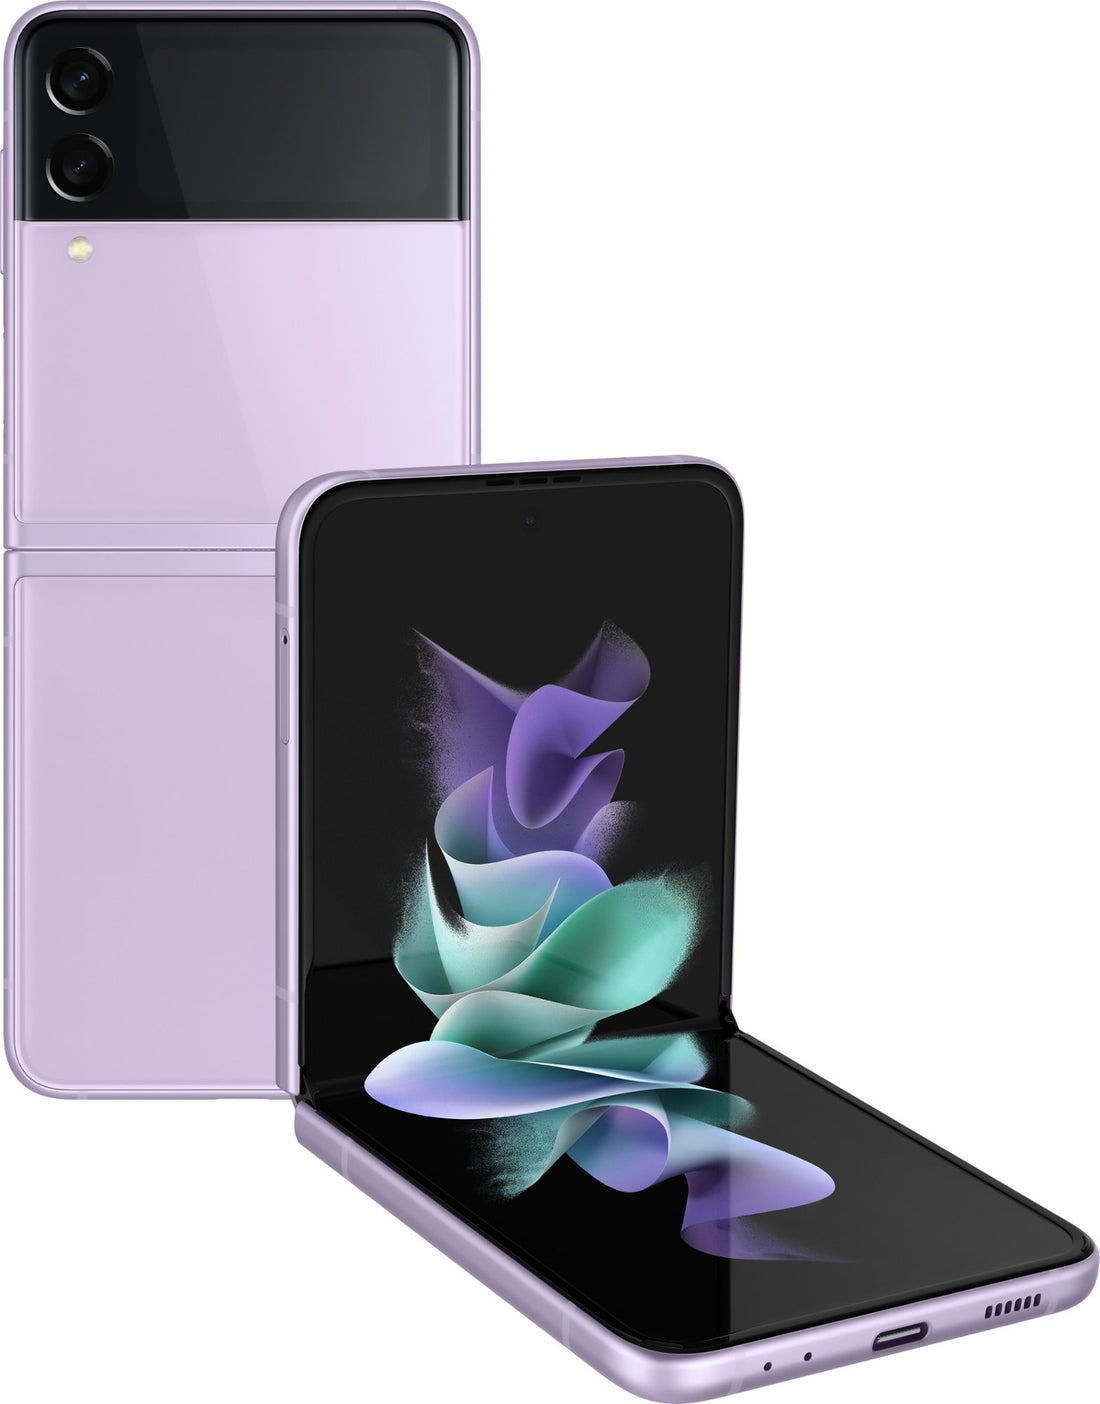 Samsung Galaxy Z Flip4 512GB (Unlocked) - Bora Purple (Certified Refurbished)